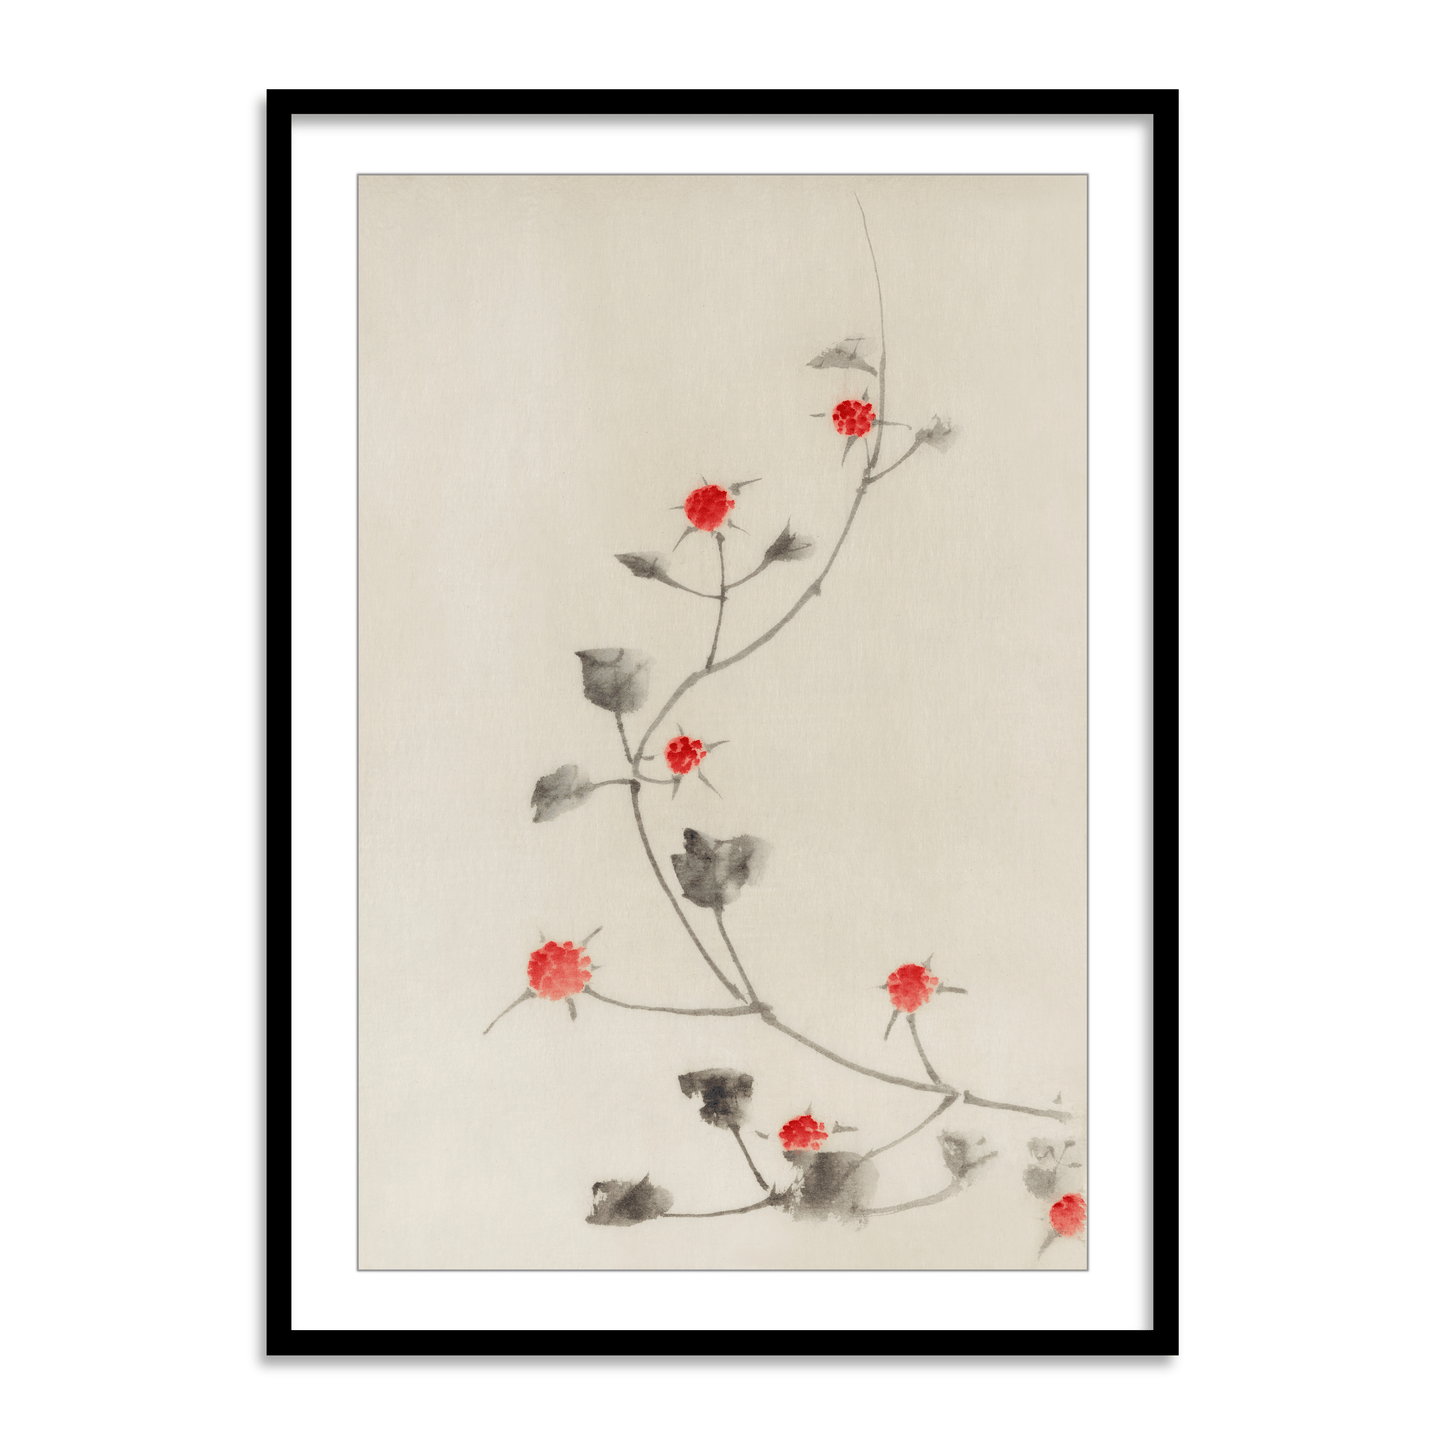 Small Red Blossoms on a Vine by Katsushika Hokusai